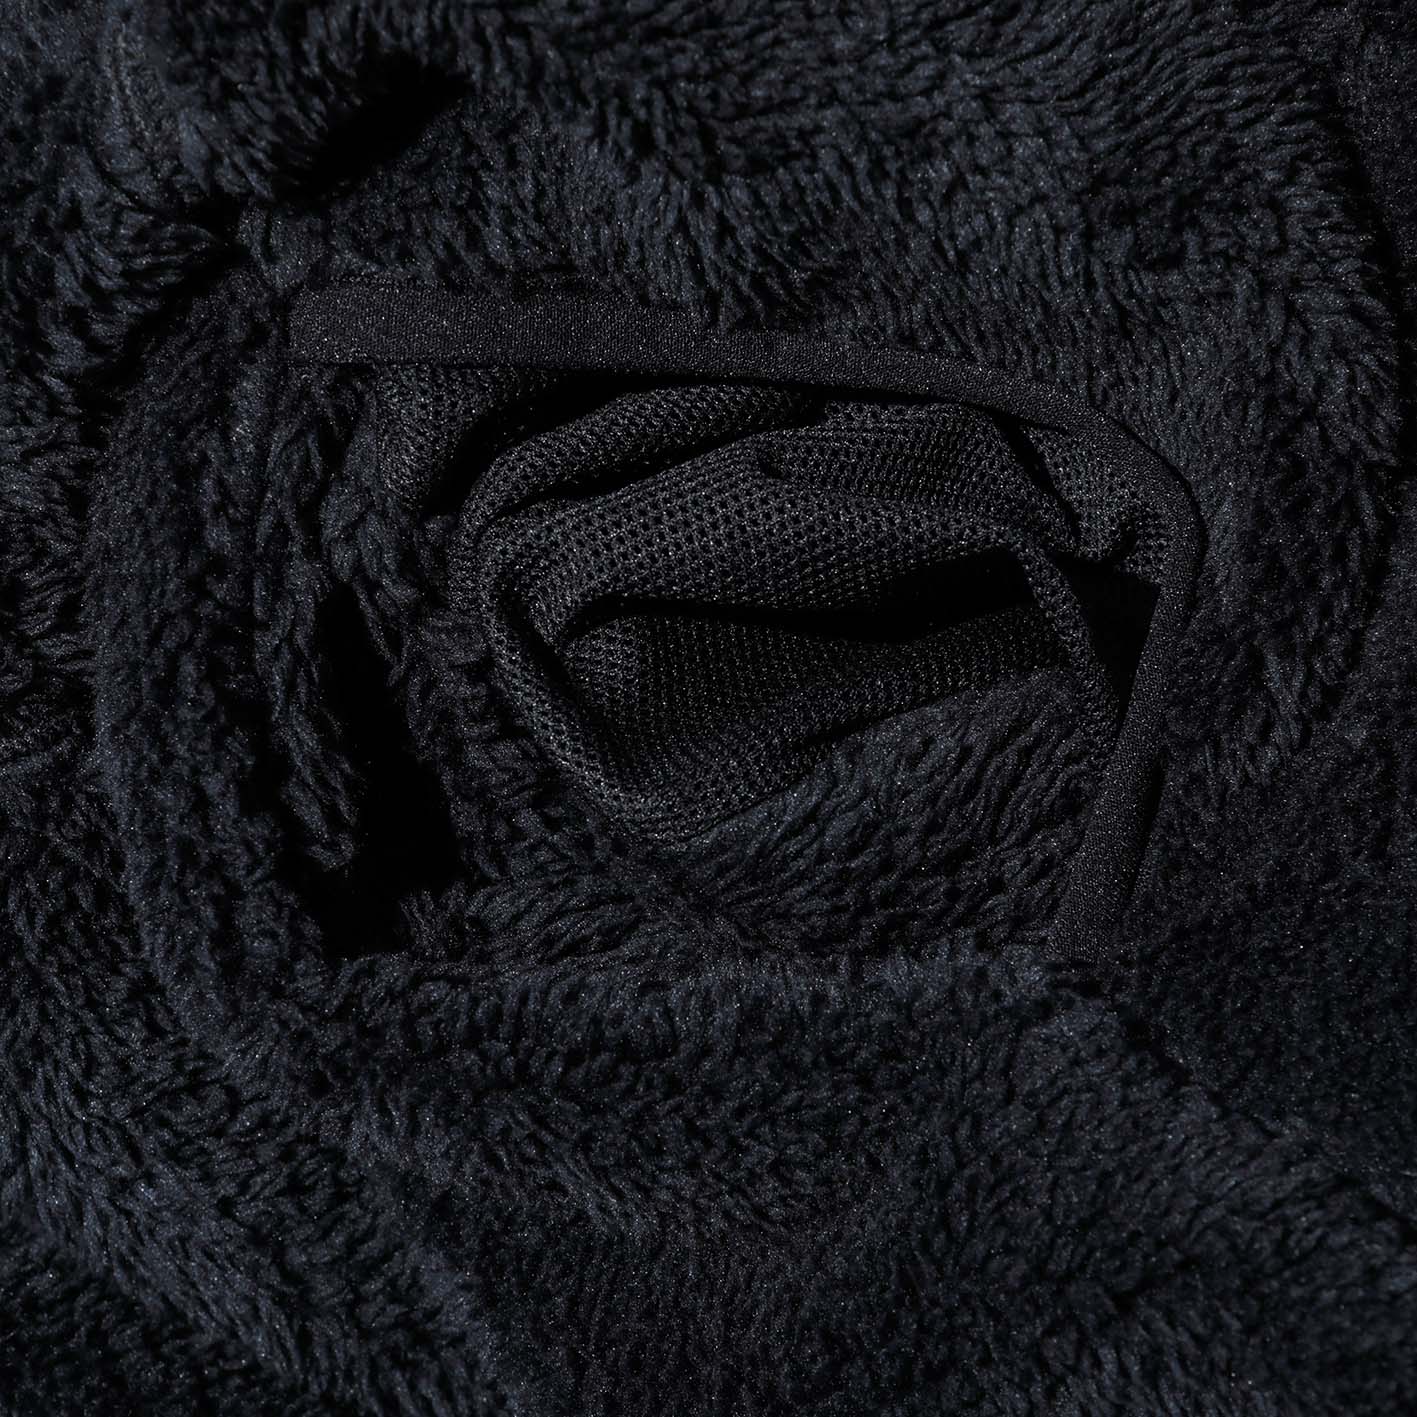 Urban Boa Fleece Sweatshirt-Reversal RVDDW-ChokeSports